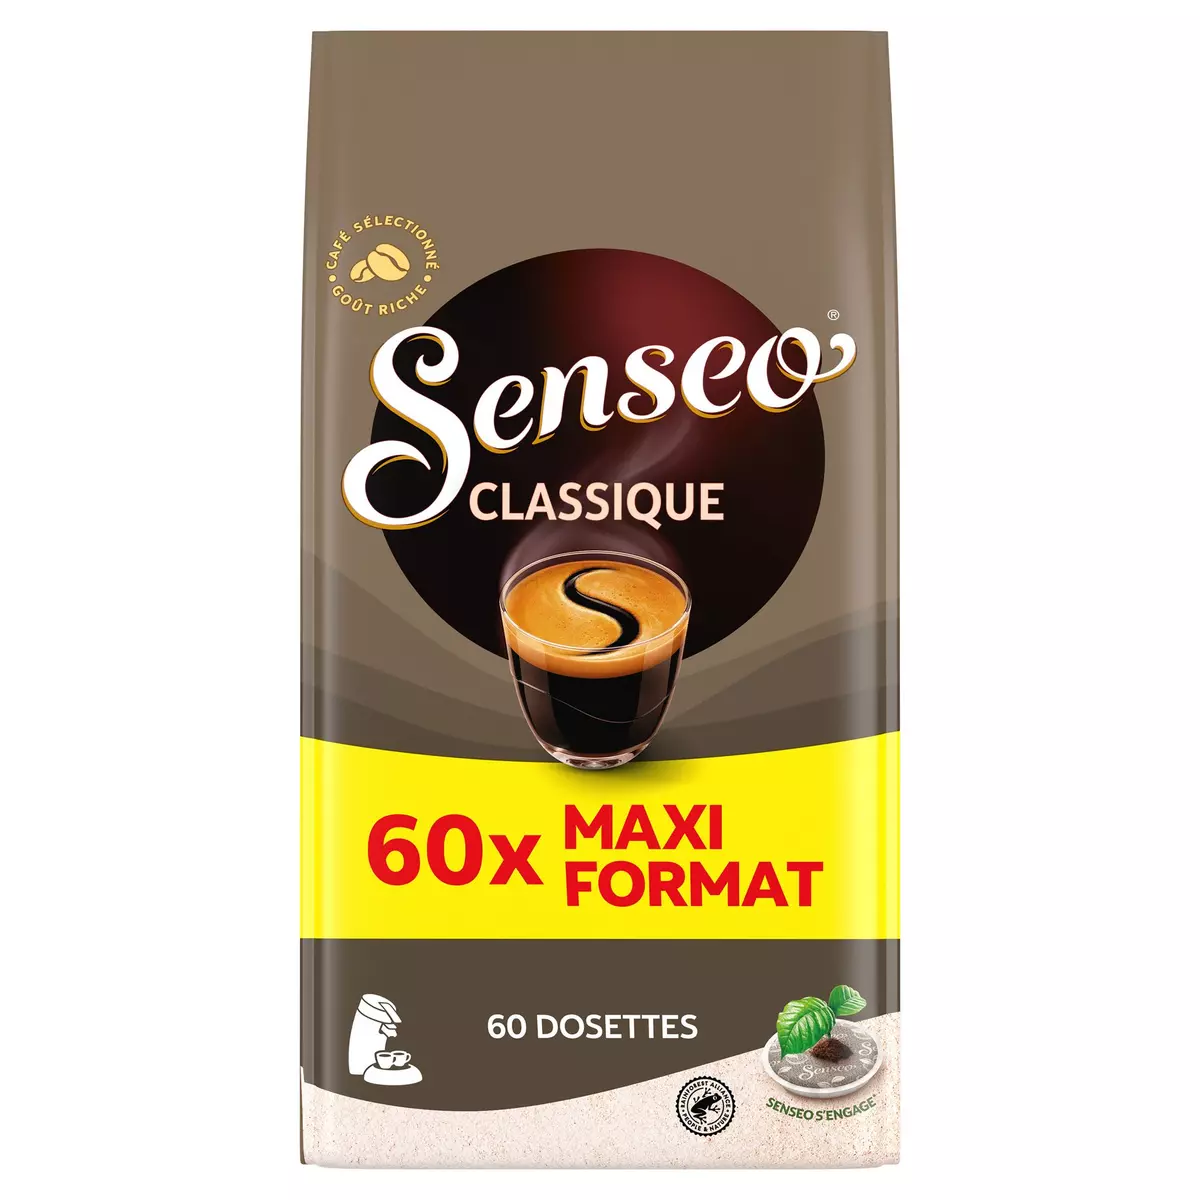 SENSEO Dosettes de café classique compostables compatibles Senseo 60 dosettes 416g